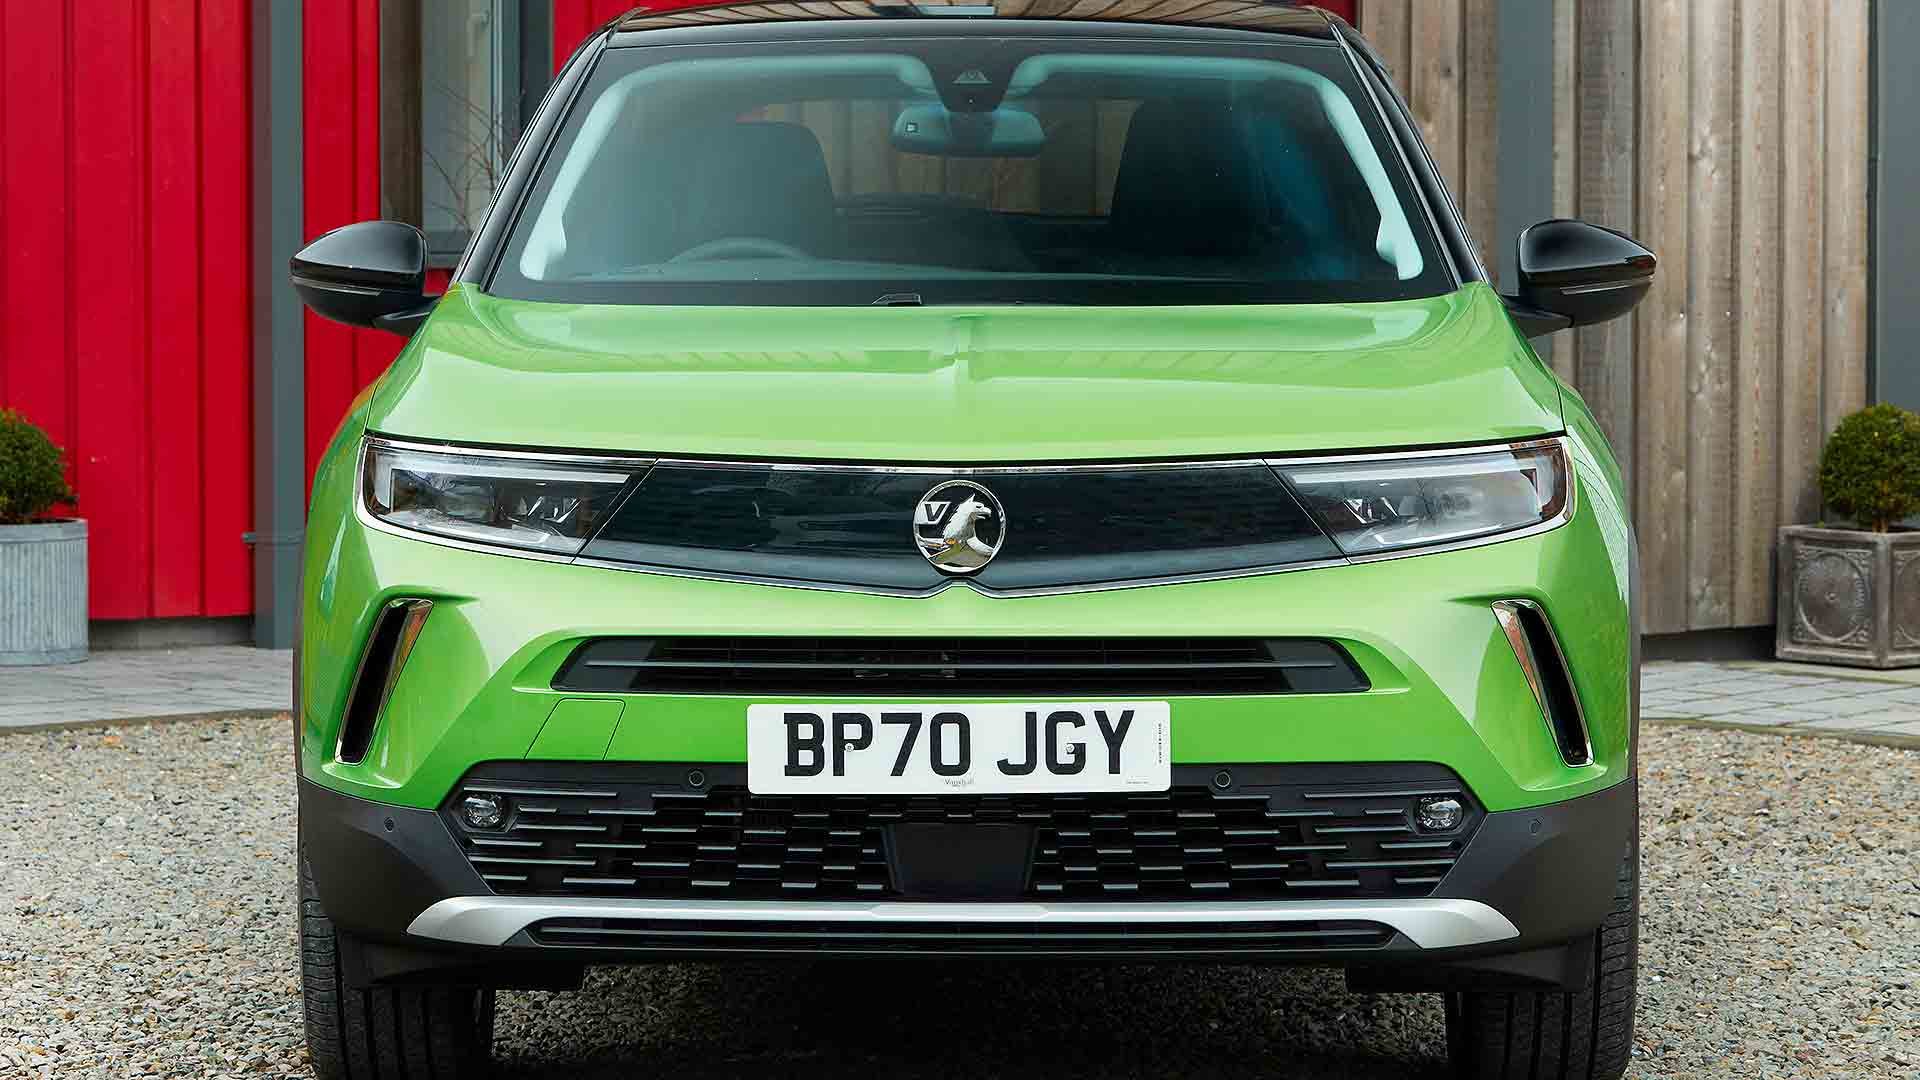 New 2021 Vauxhall Mokka-e in bright metallic green